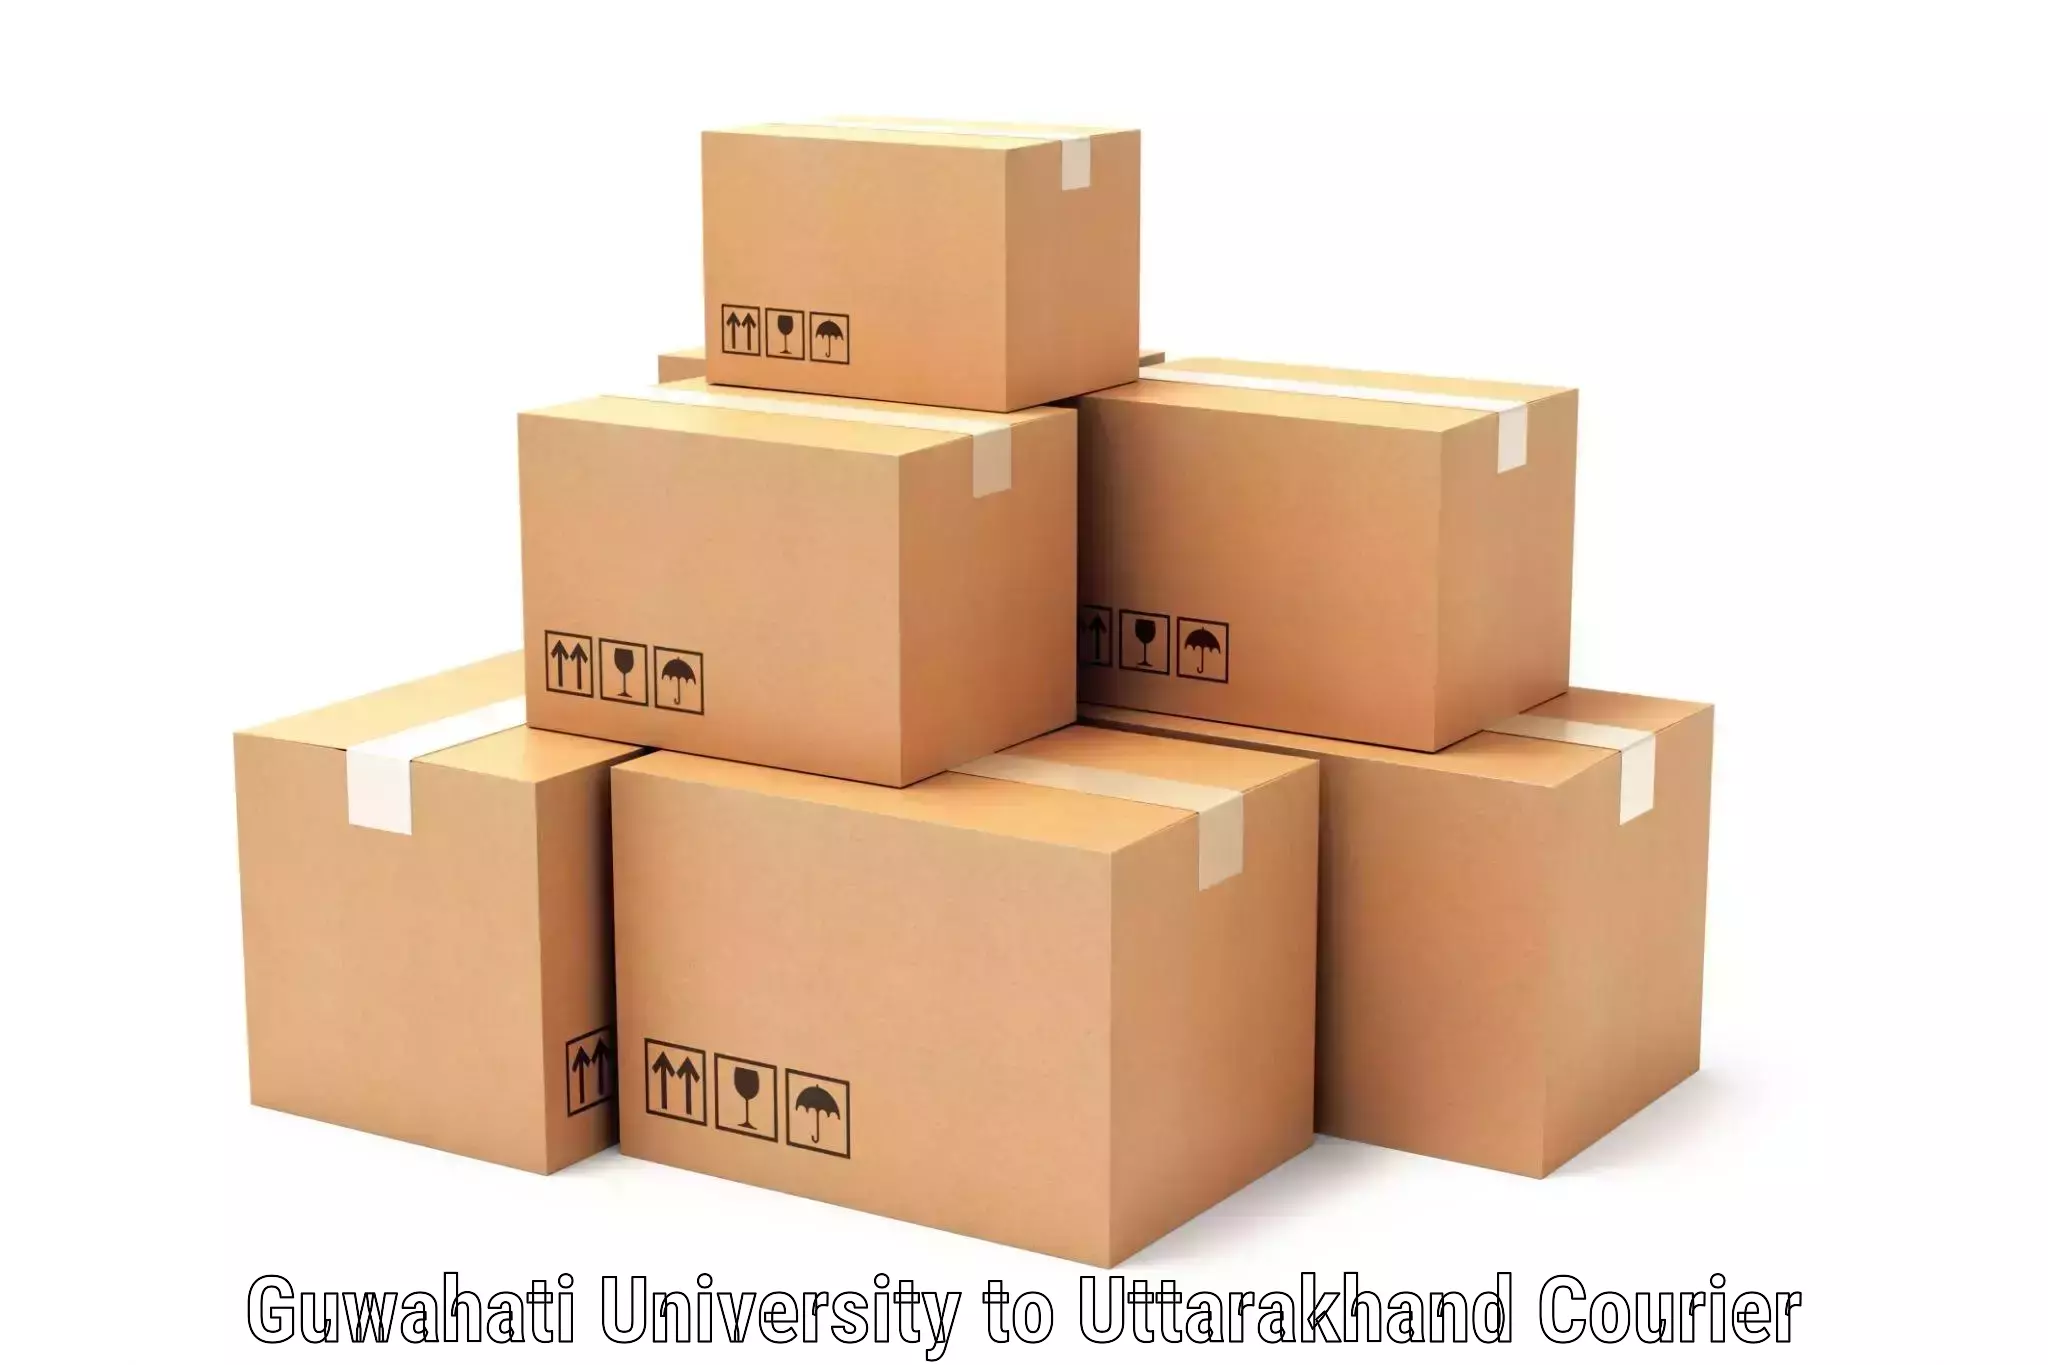 Same-day delivery solutions Guwahati University to Dehradun